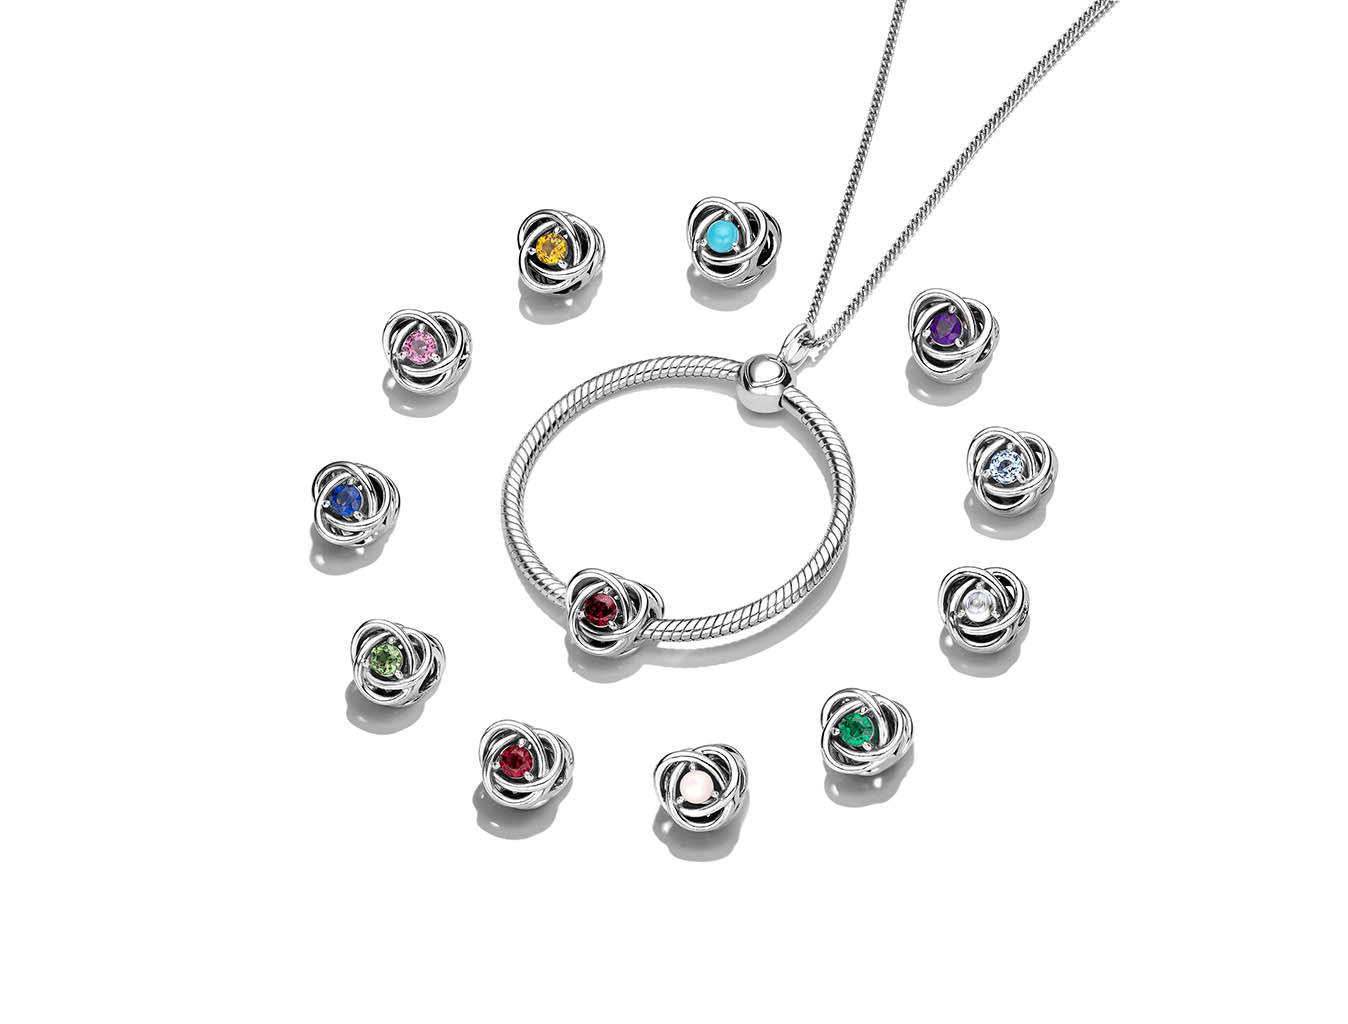 Jewellery Photography of Pandora jewellery pendants by Packshot Factory